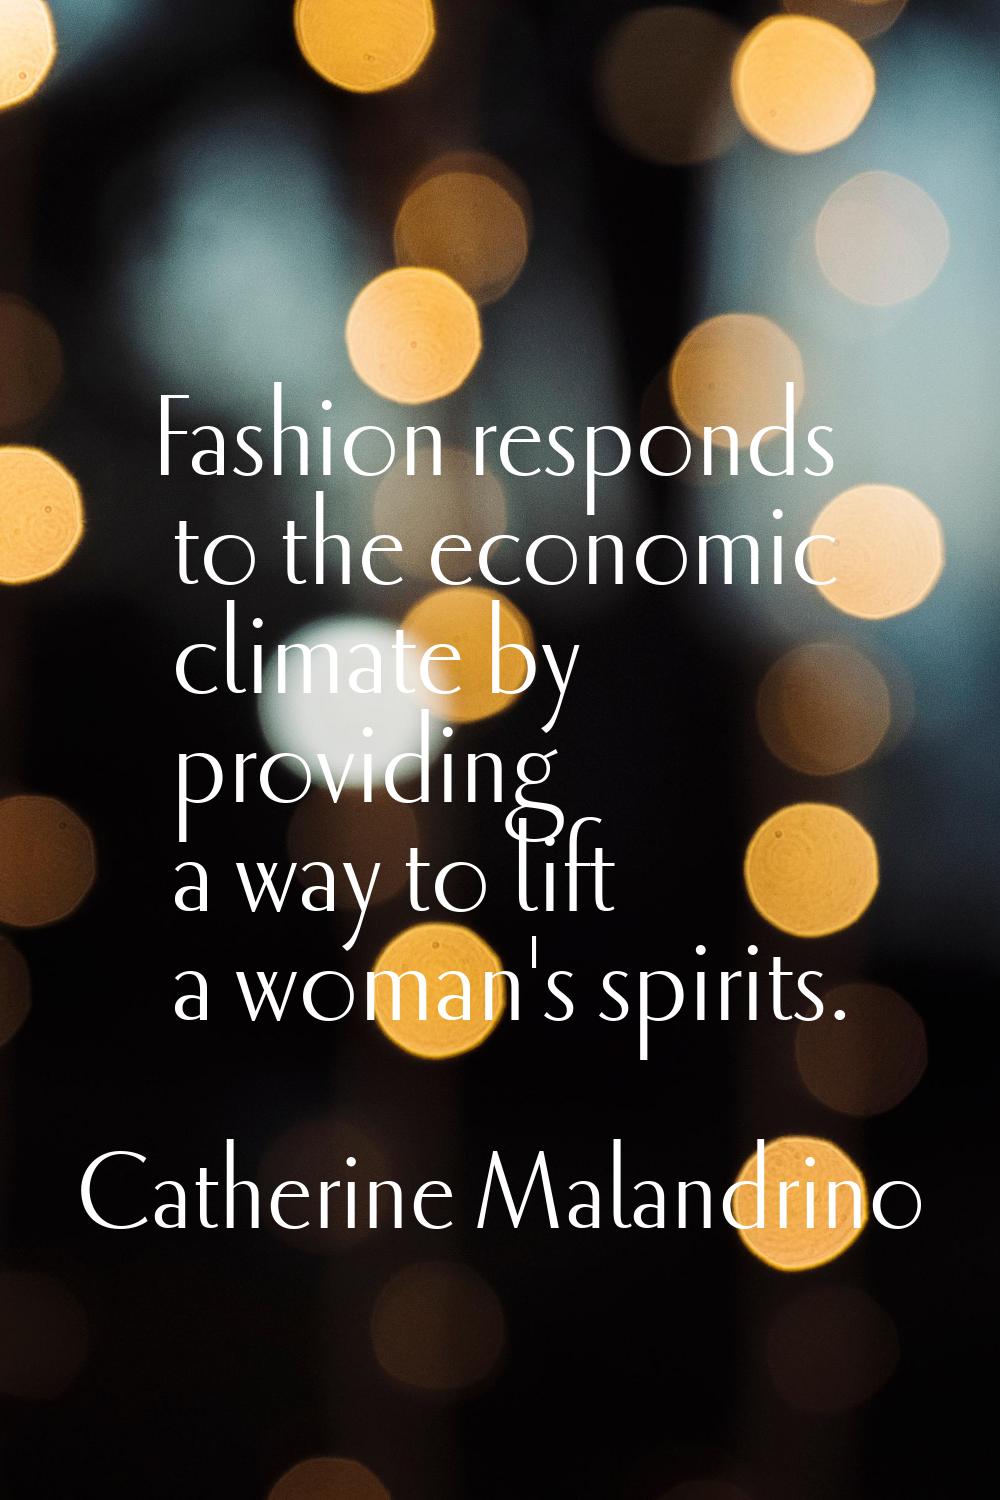 Fashion responds to the economic climate by providing a way to lift a woman's spirits.